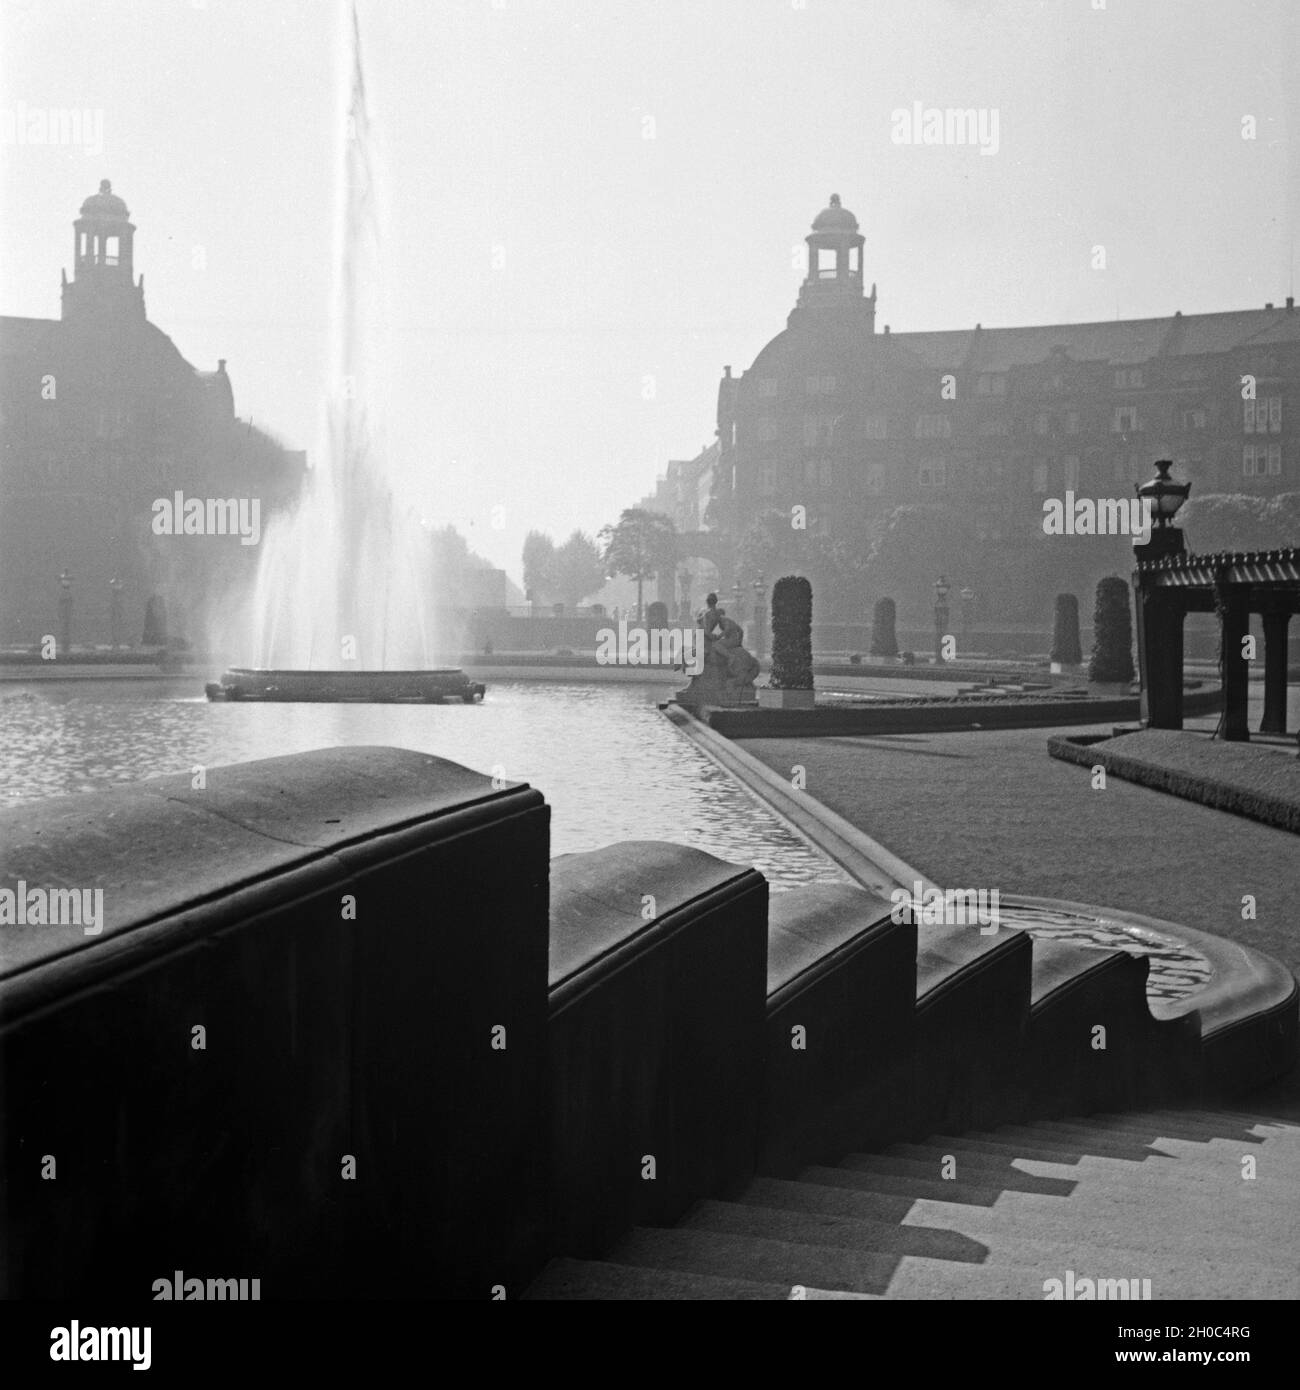 Wasserturm Black and White Stock Photos & Images - Alamy